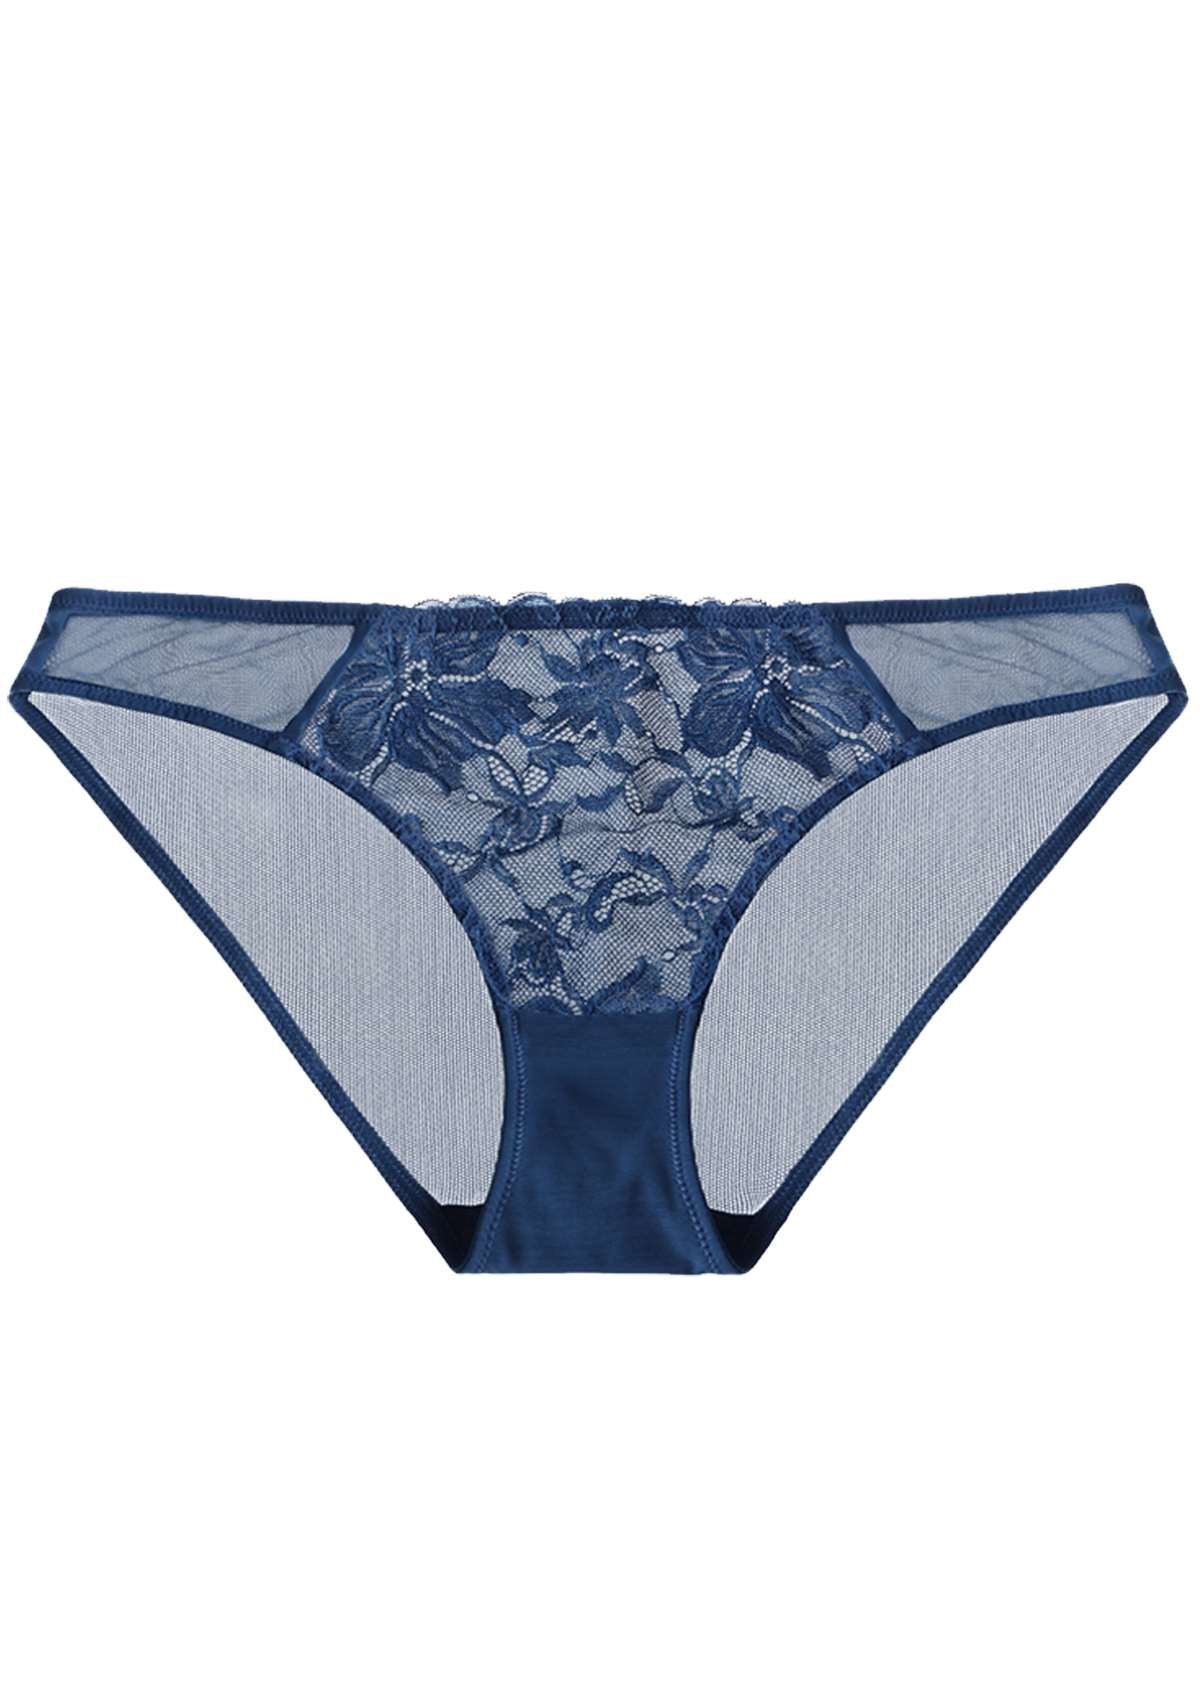 HSIA Breathable Sexy Feminine Lace Mesh Bikini Underwear - XL / Blue